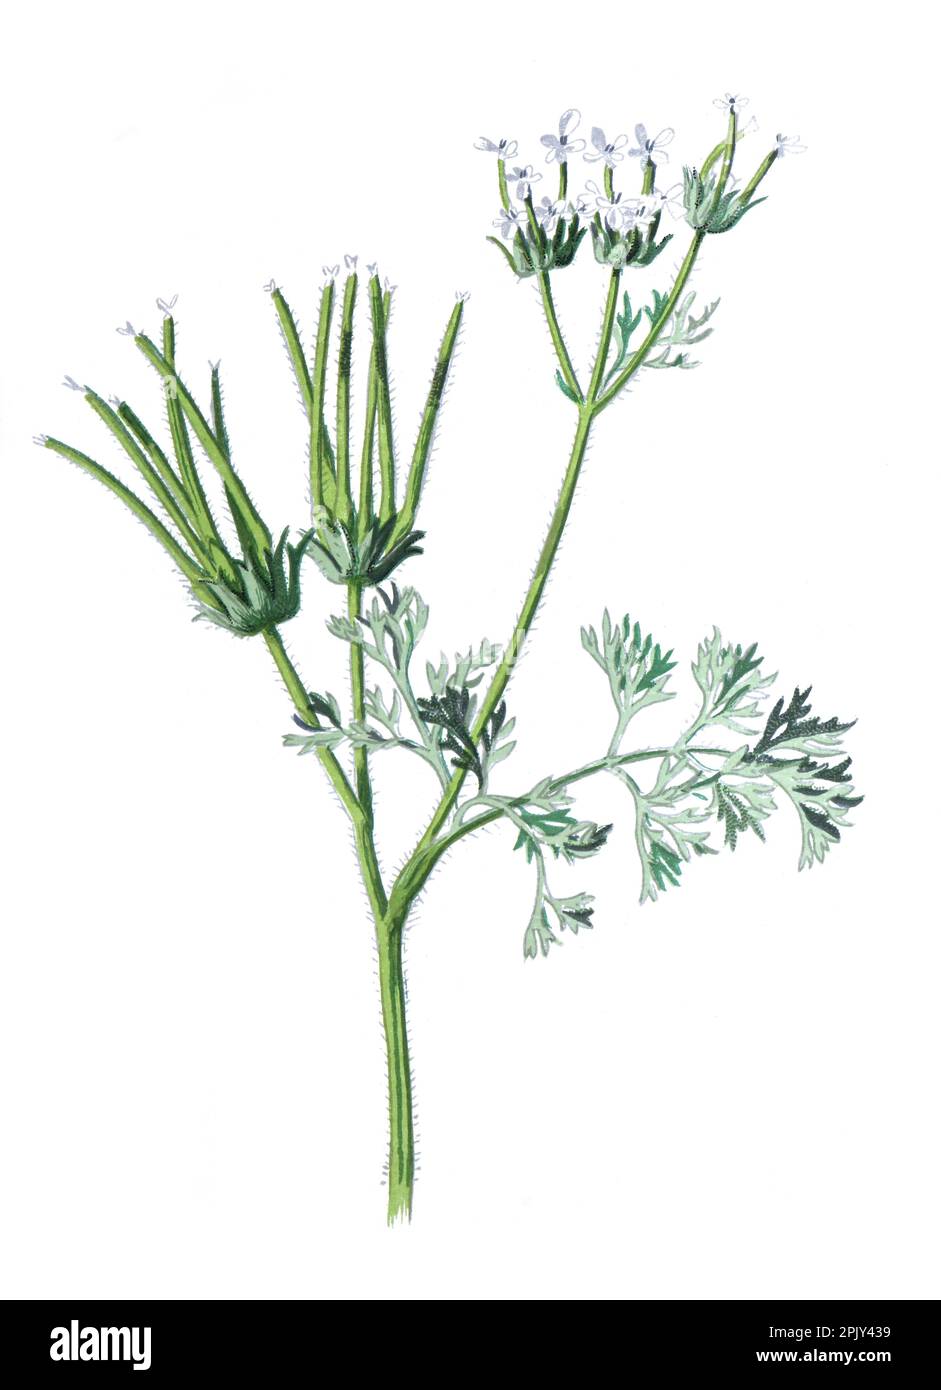 Shepherd's needle or Scandix pecten-veneris. family of Apiaceae flower. Antique hand drawn field flowers illustration. Vintage wild organic flowers. Stock Photo